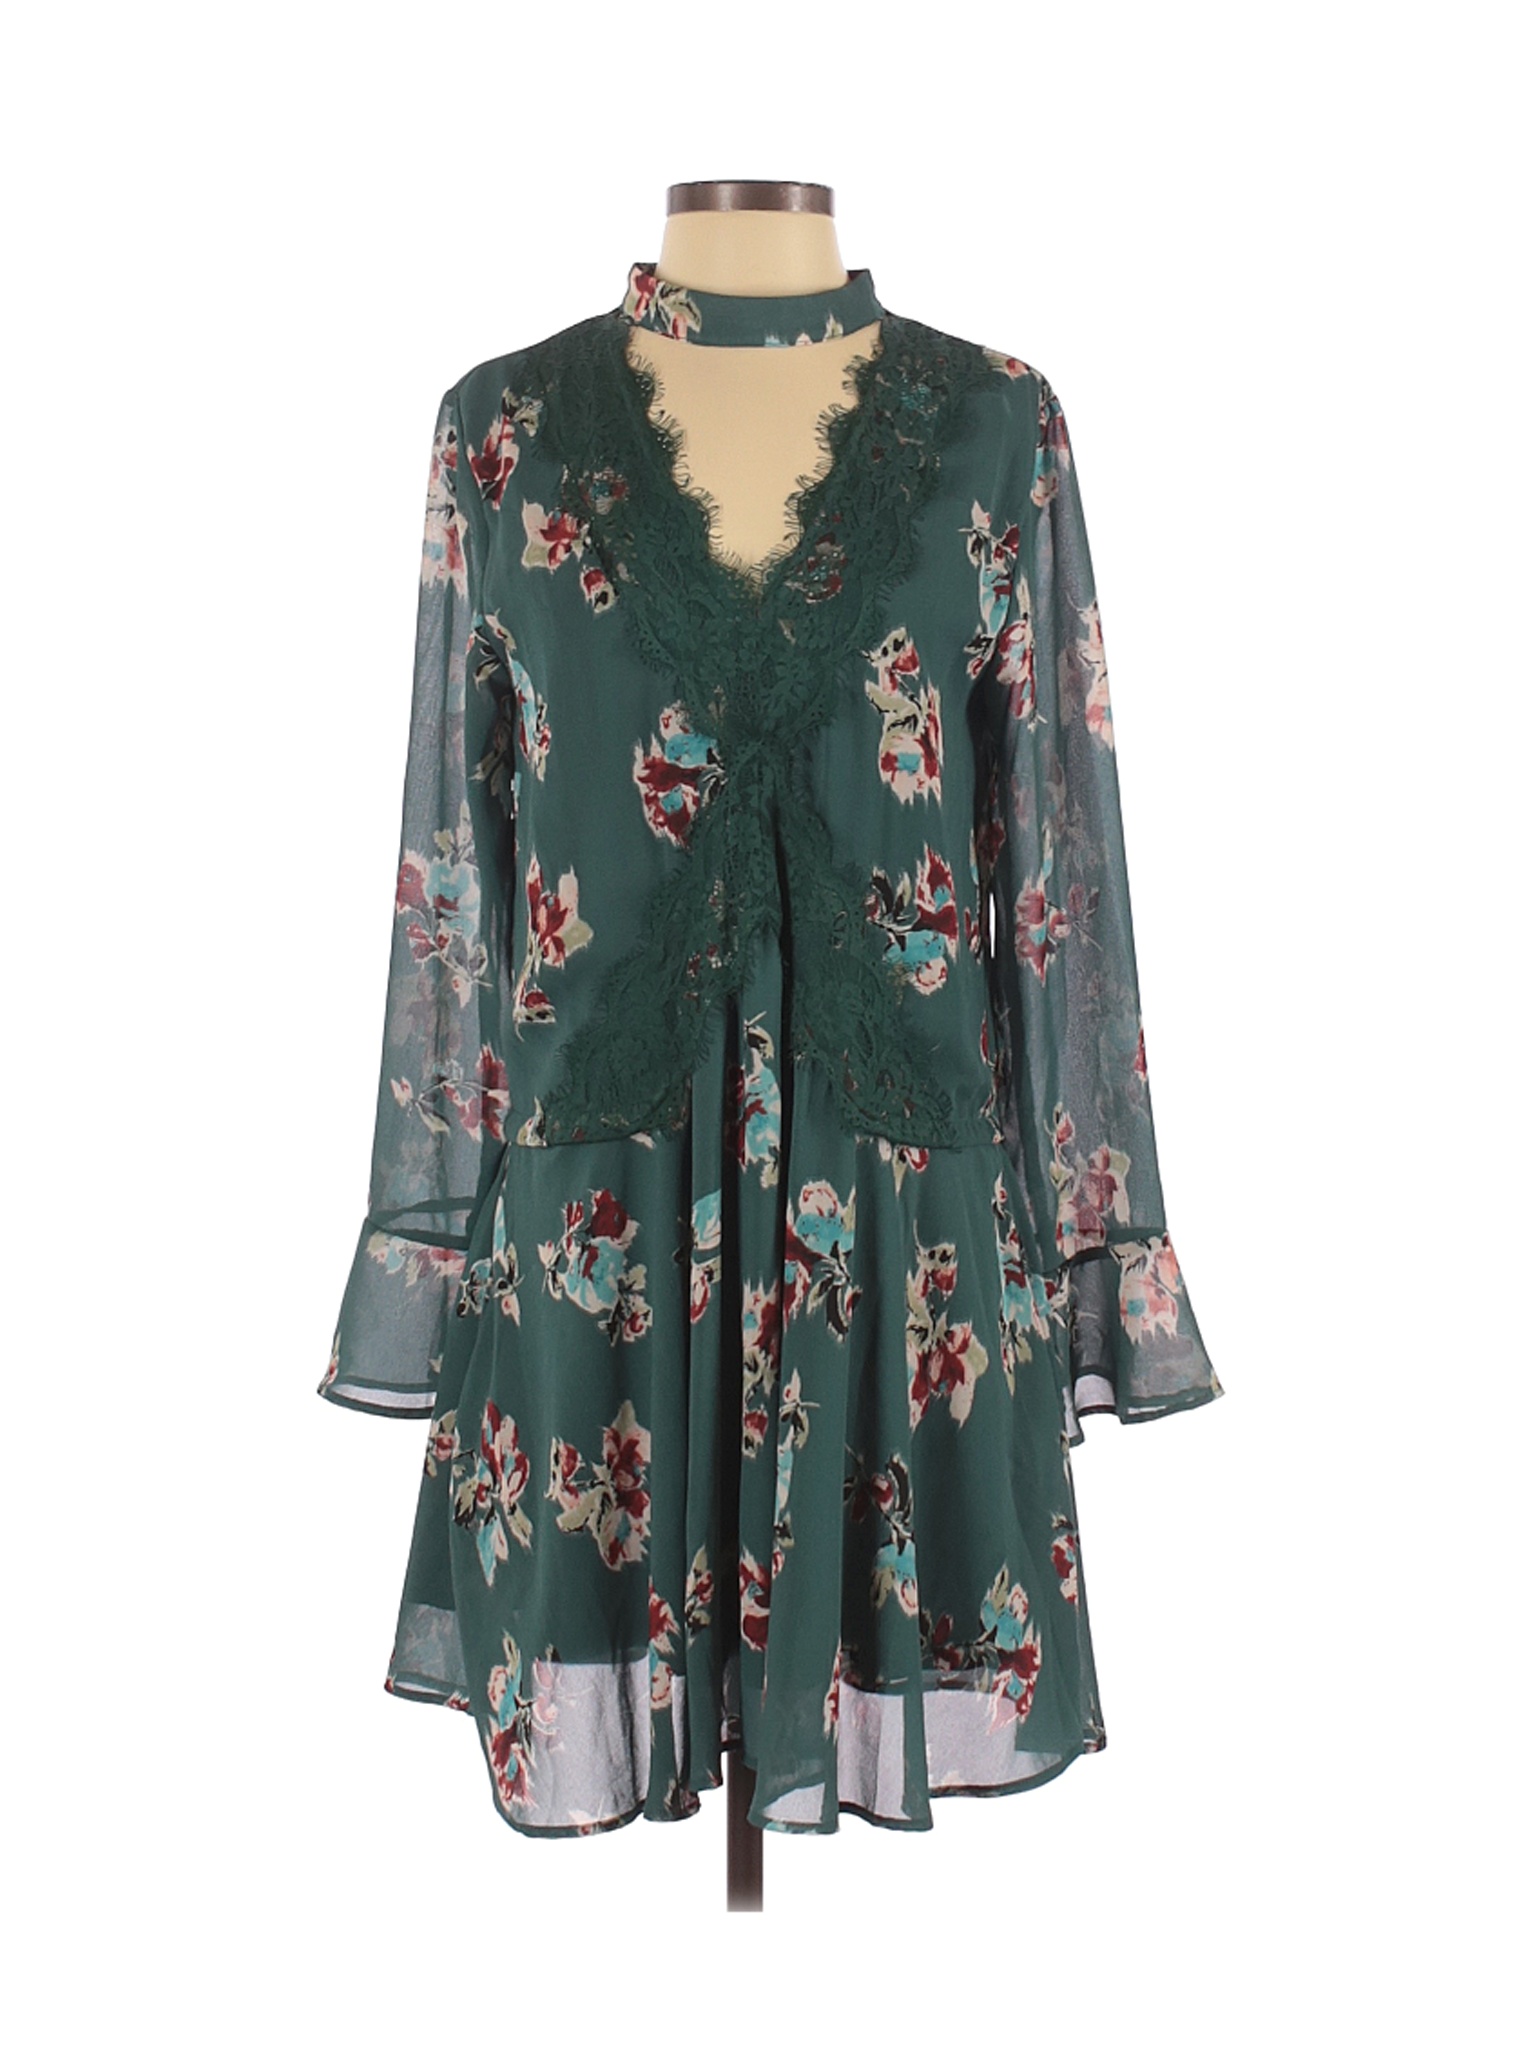 Jodifl Women Green Cocktail Dress S | eBay